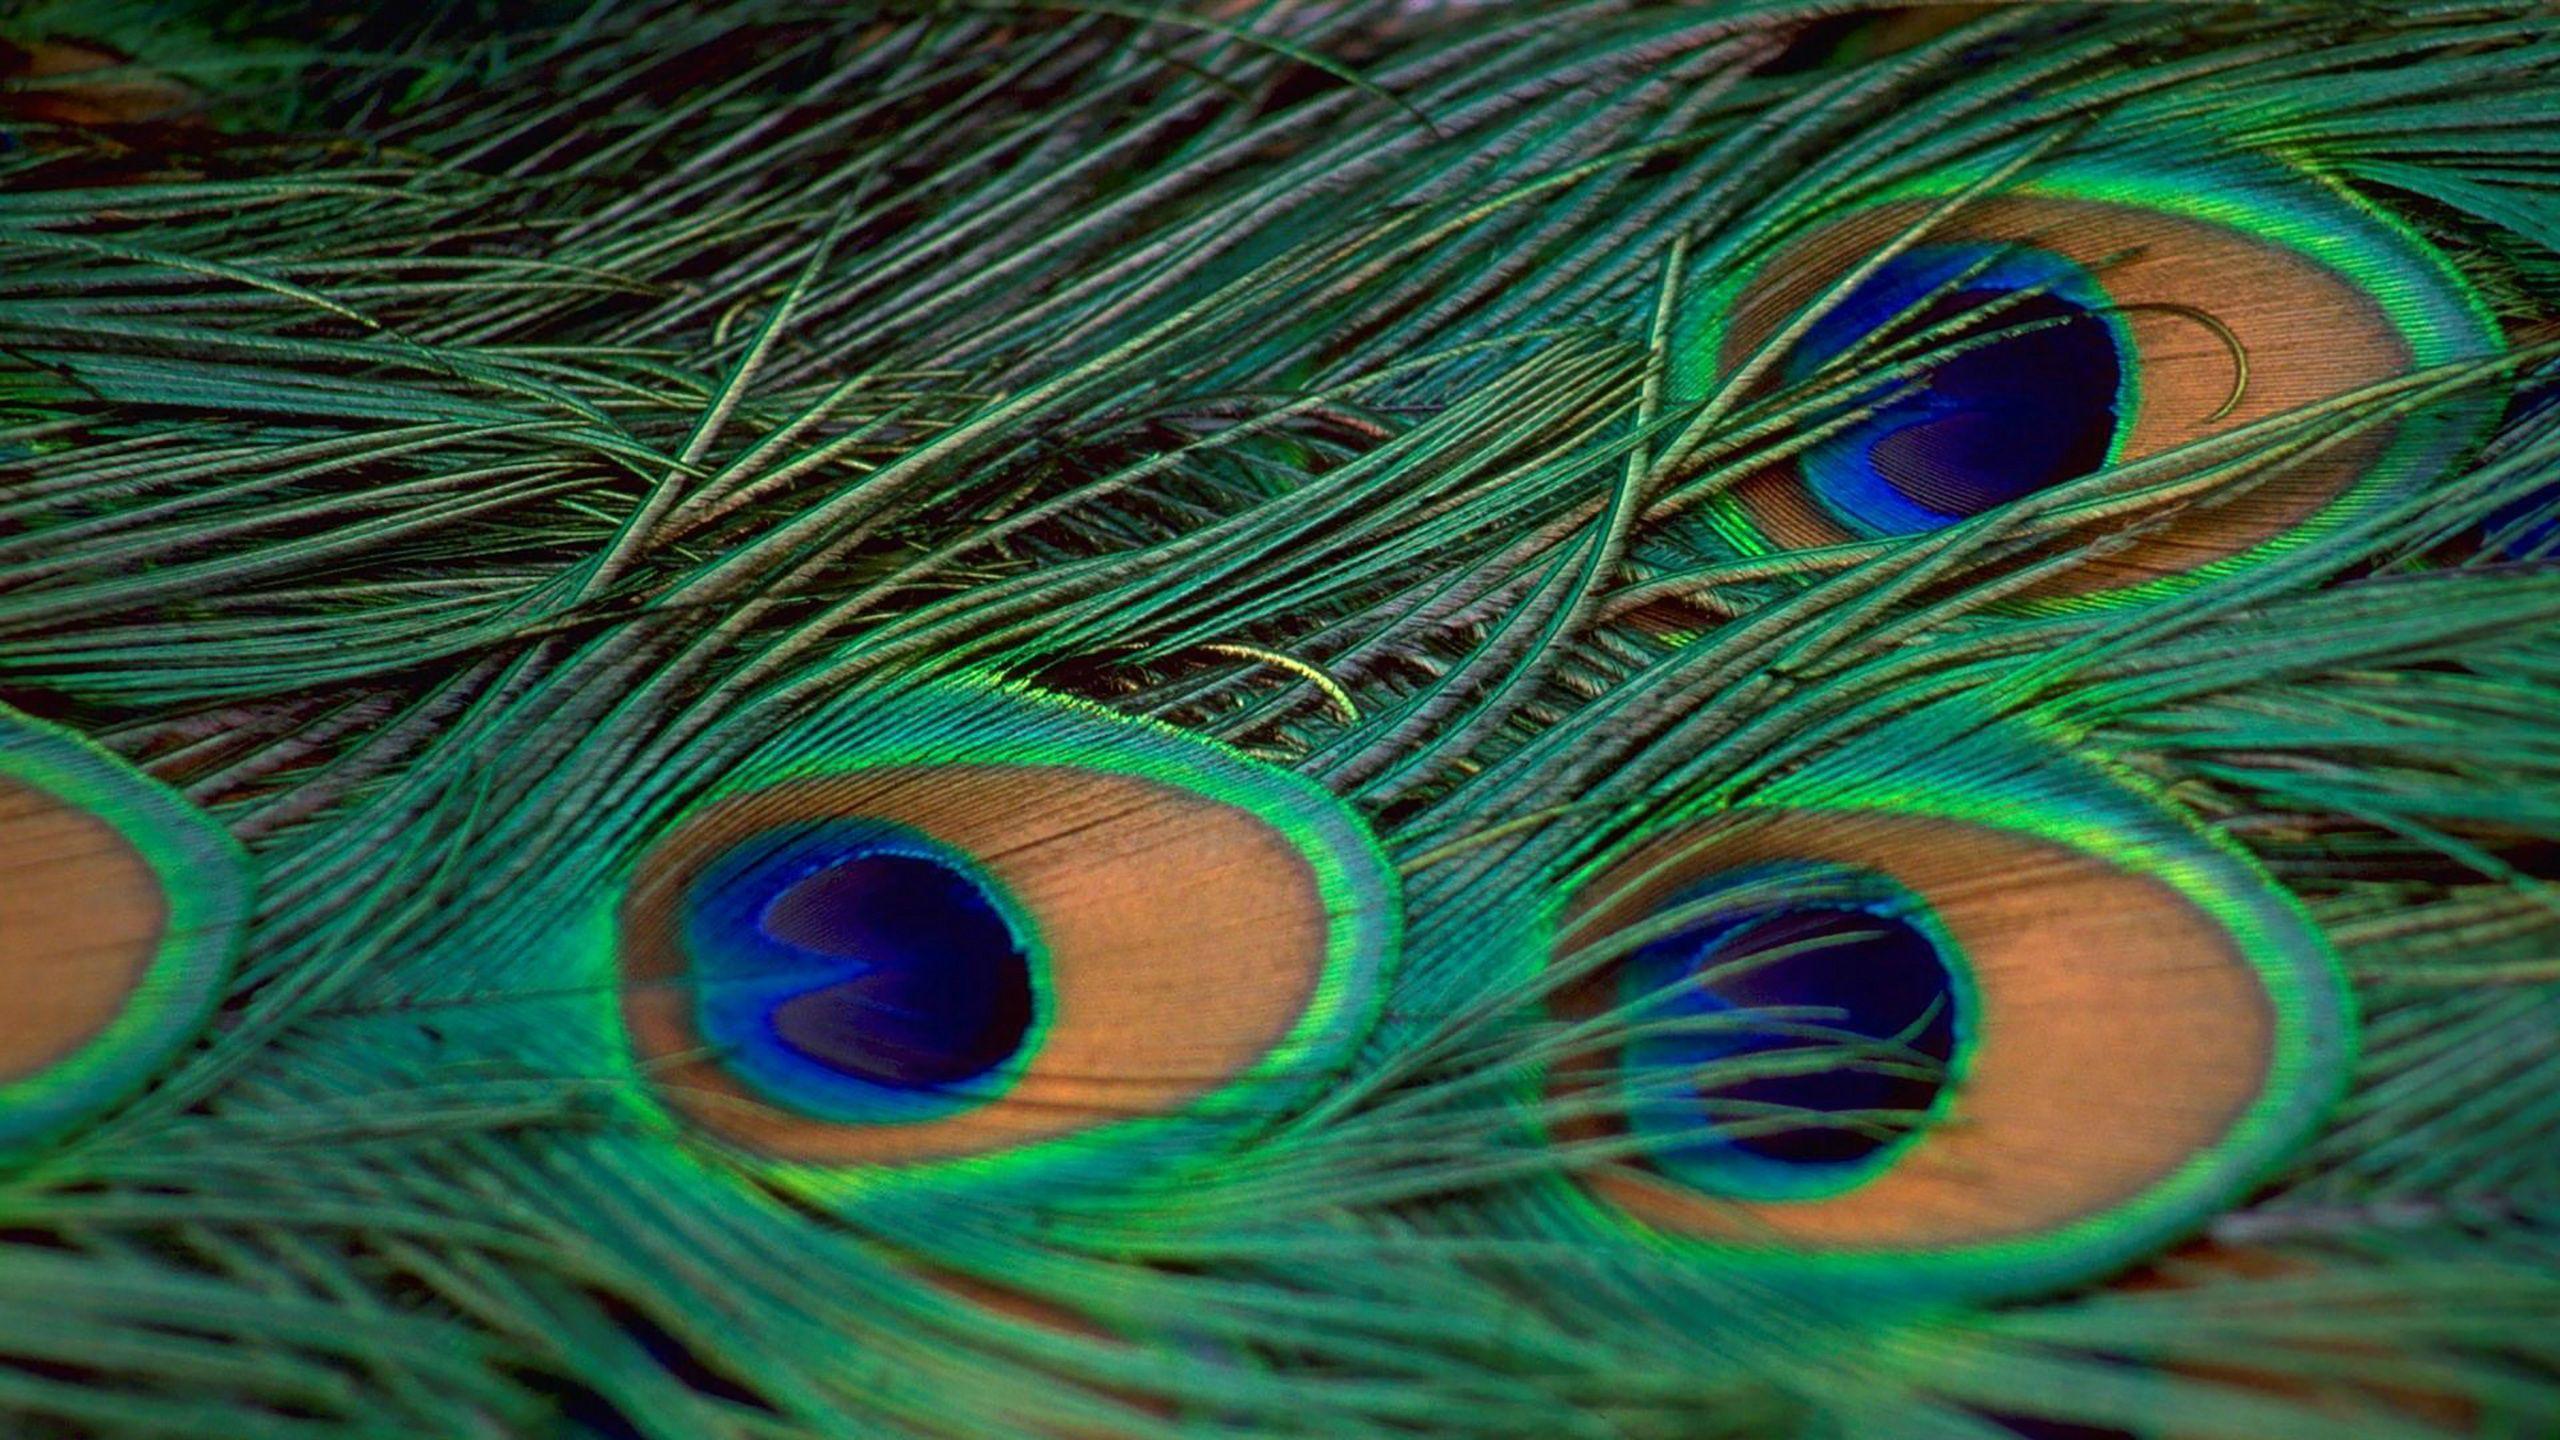 Peacock Feather 4k Ultra HD Wallpaper